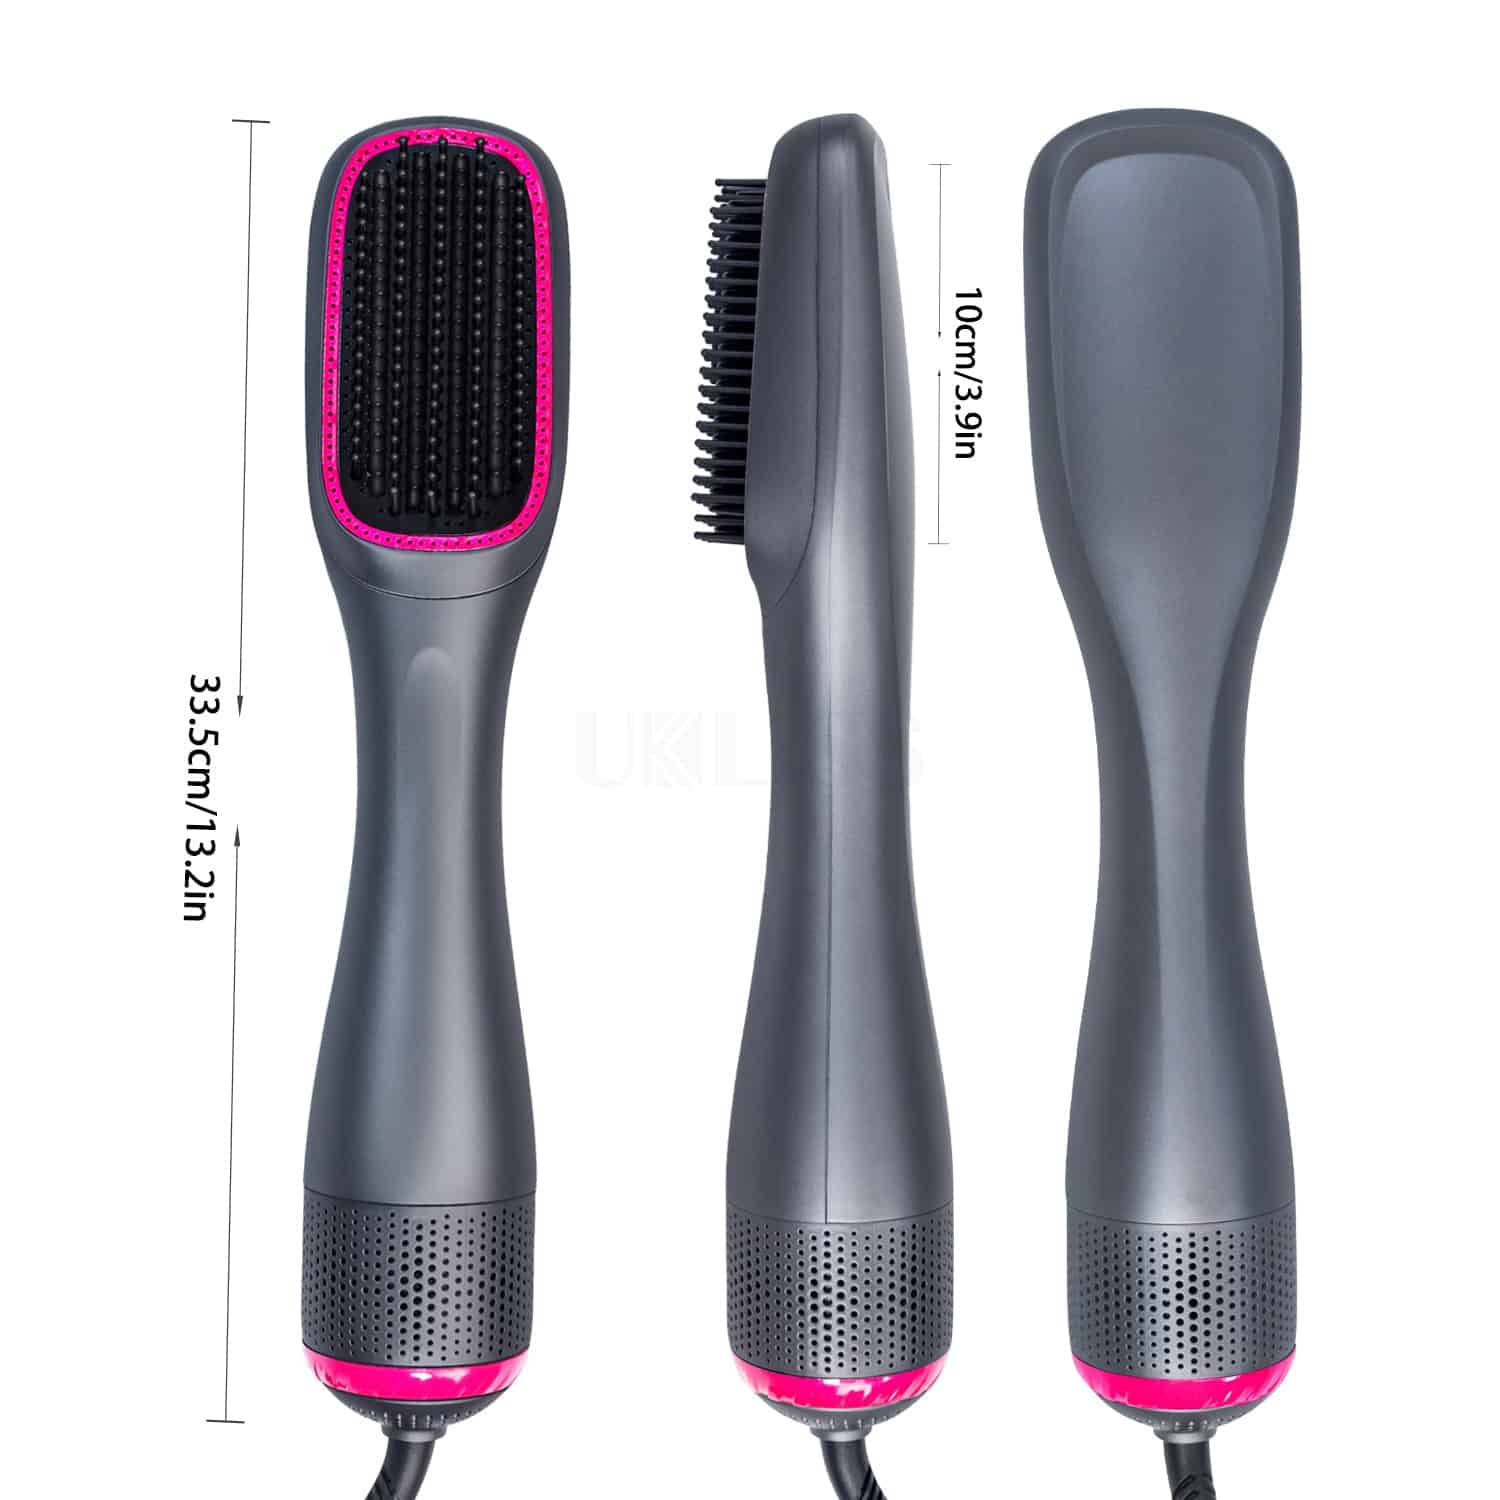 3 In 1 Hair Dryer Brush One Step Hair Dryer For Hair Hot Air Brush Blow Dryer Travel Blower Drier Hot Comb Hairdryer Hairbrush